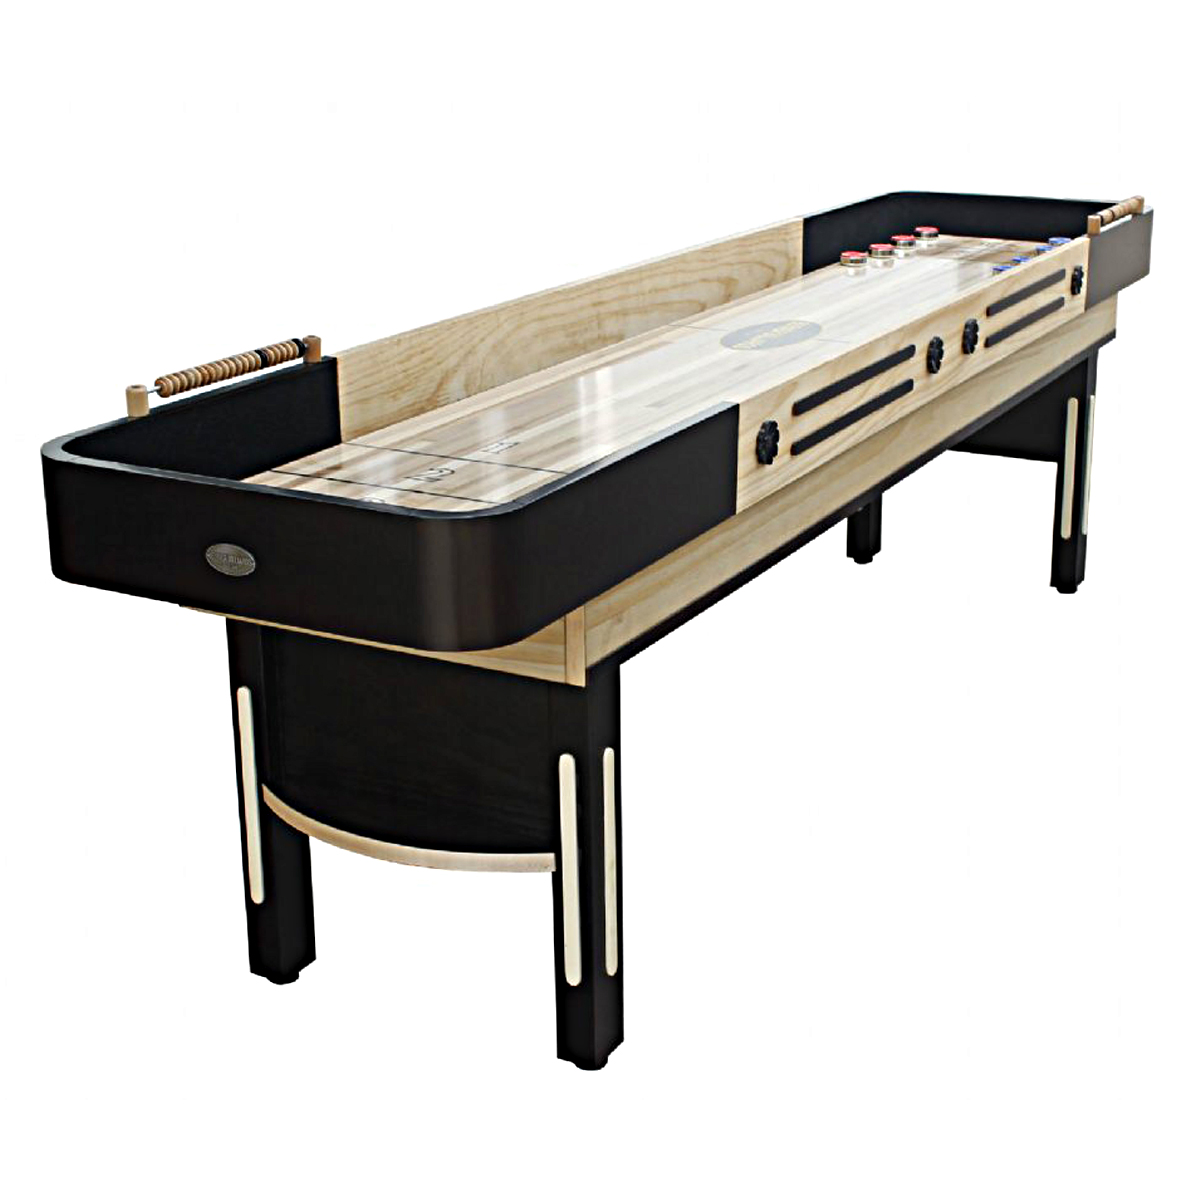 The-Premier-Shuffleboard-Table-Espresso-1-1.jpg